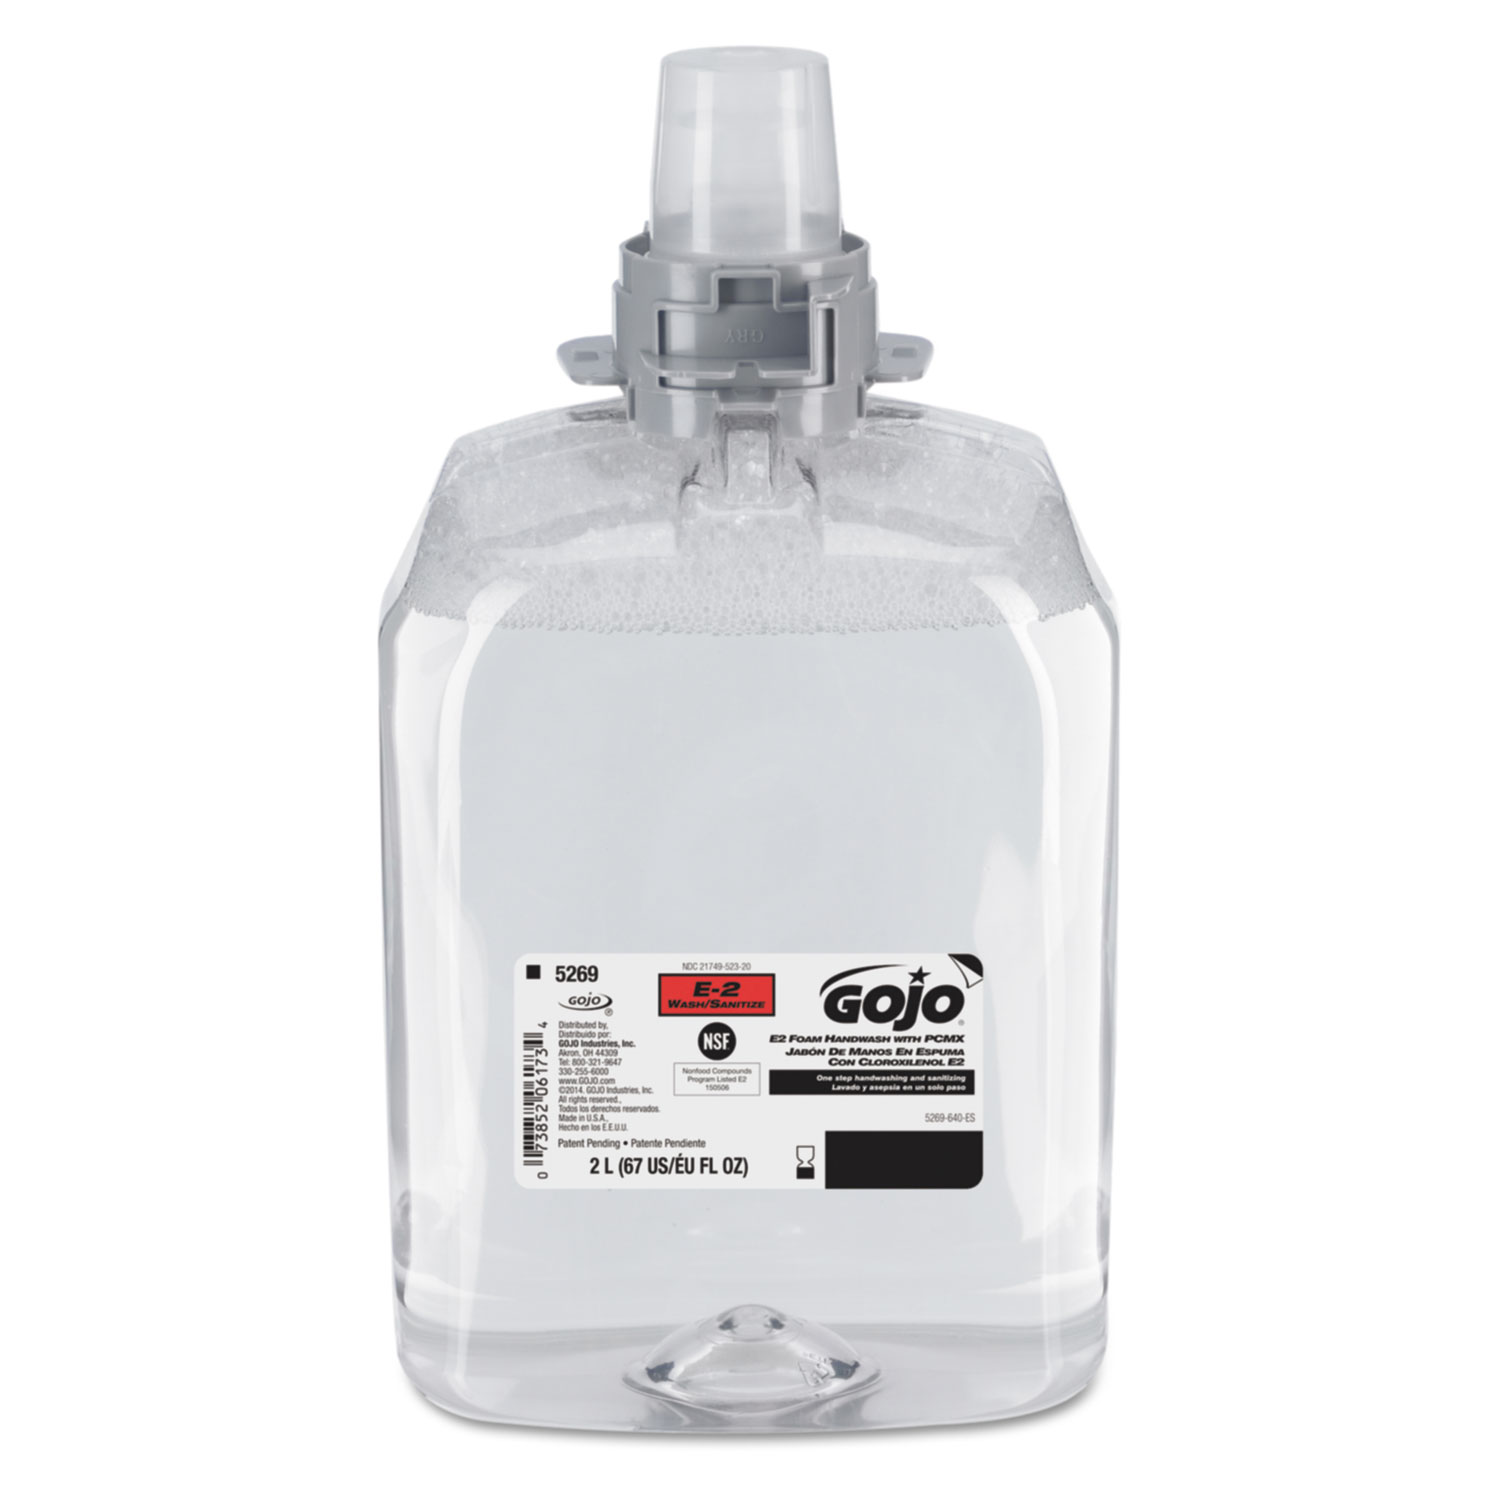  GOJO 5269-02 E2 Foam Handwash with PCMX f/FMX-20 Dispensers, 2000 mL Refill, 2/Carton (GOJ526902) 